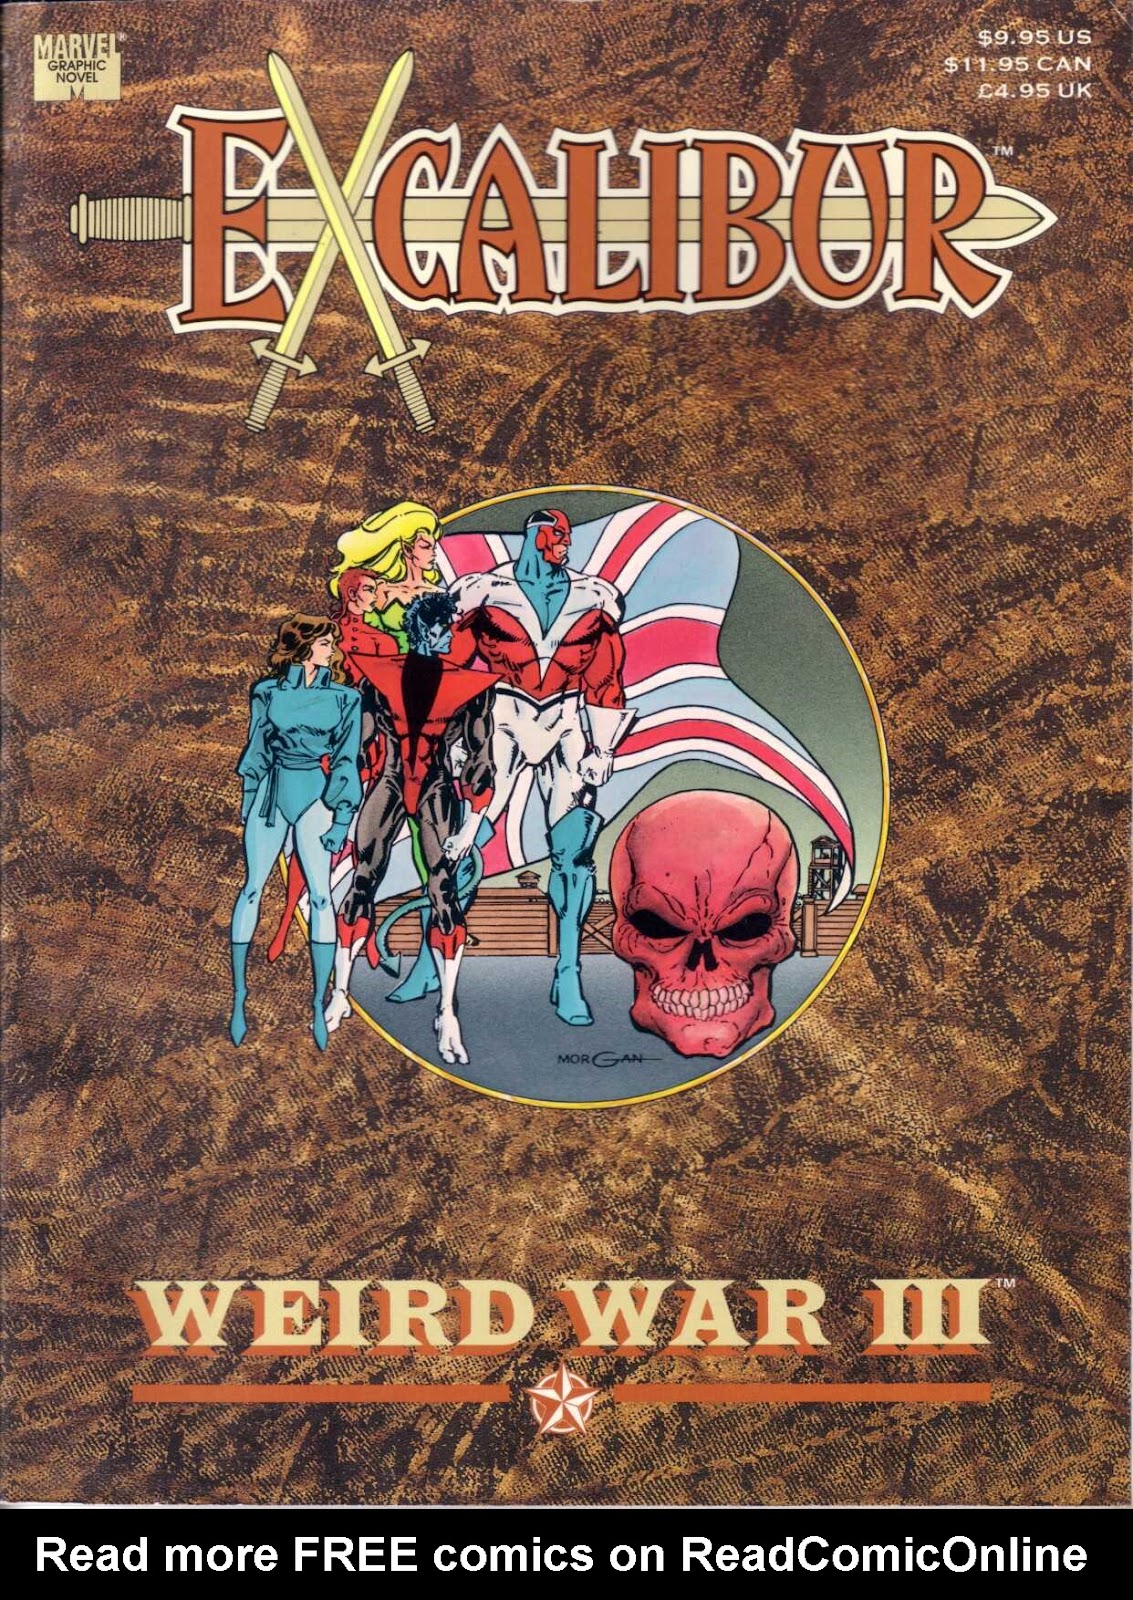 Marvel Graphic Novel issue 66 - Excalibur - Weird War III - Page 1